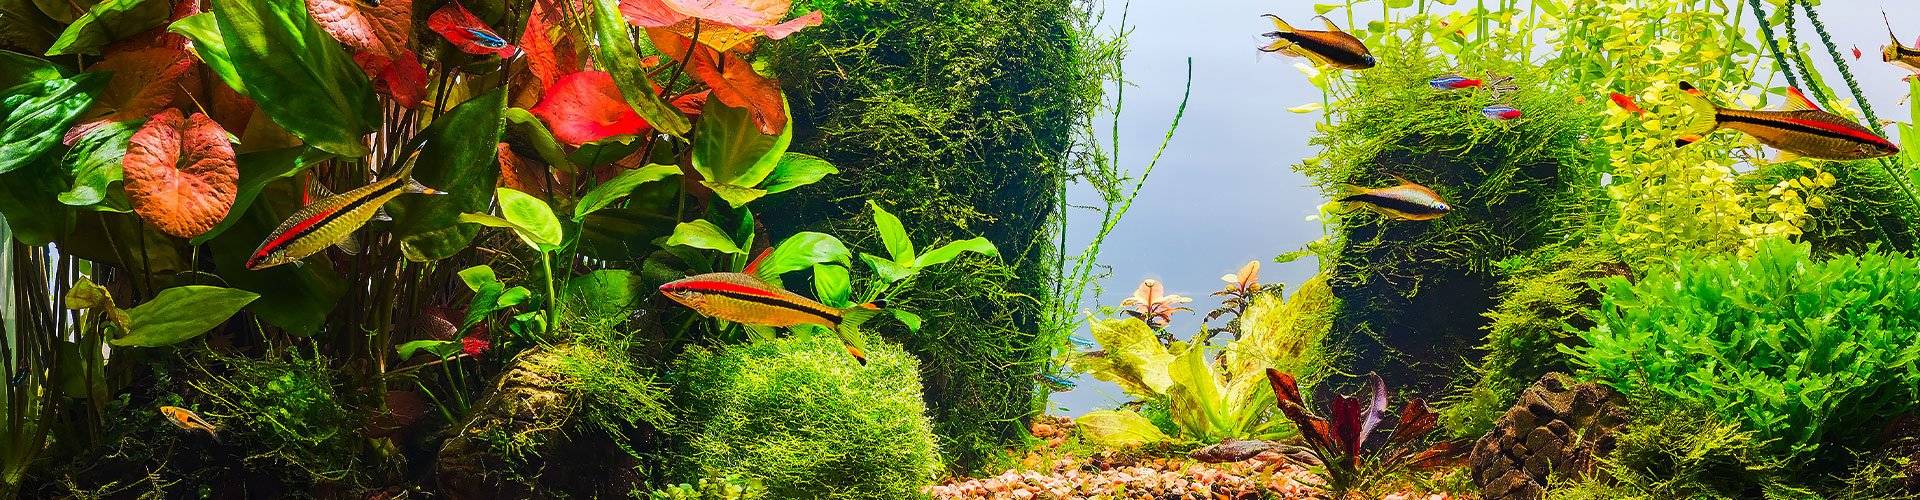 Live plants in fish tanks